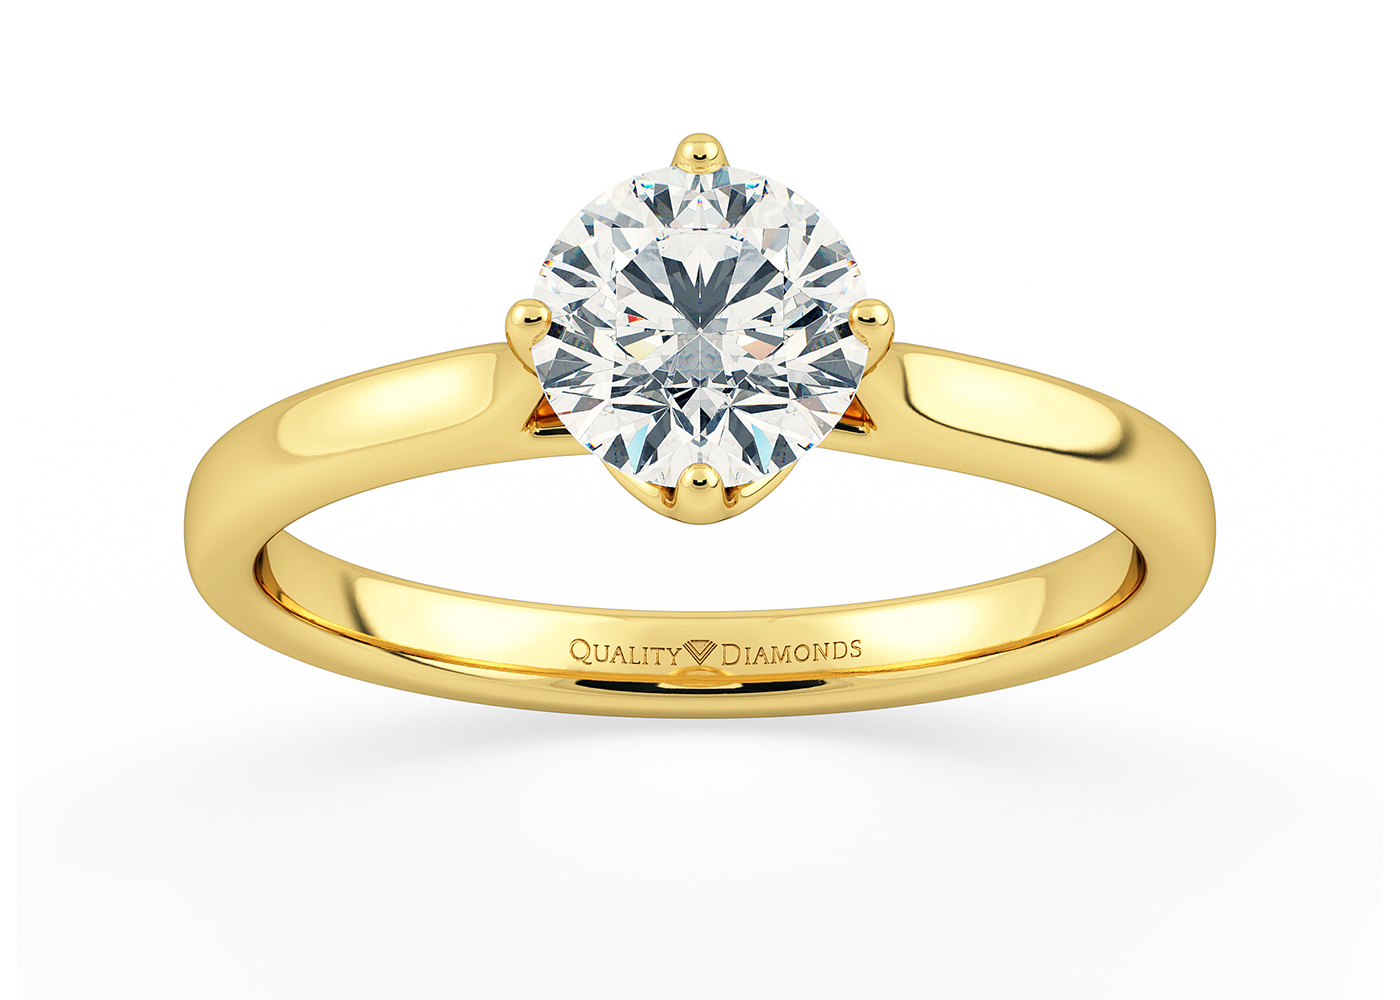 Round Brilliant Promessa Diamond Ring in 18K Yellow Gold